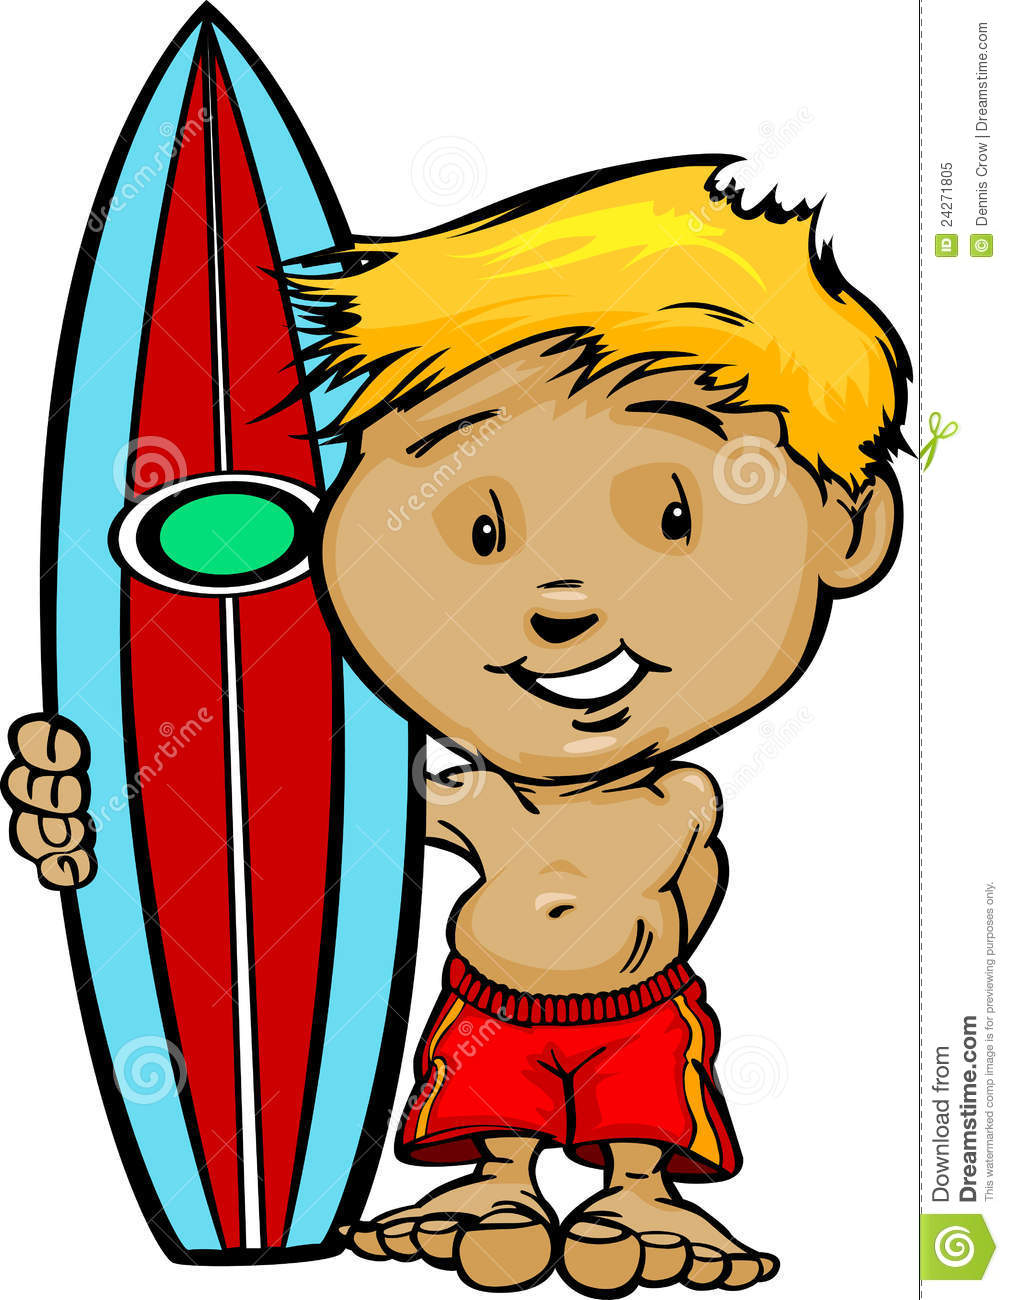 More Similar Stock Images Of   Kid Surfer Boy Holding Surfboard Image    